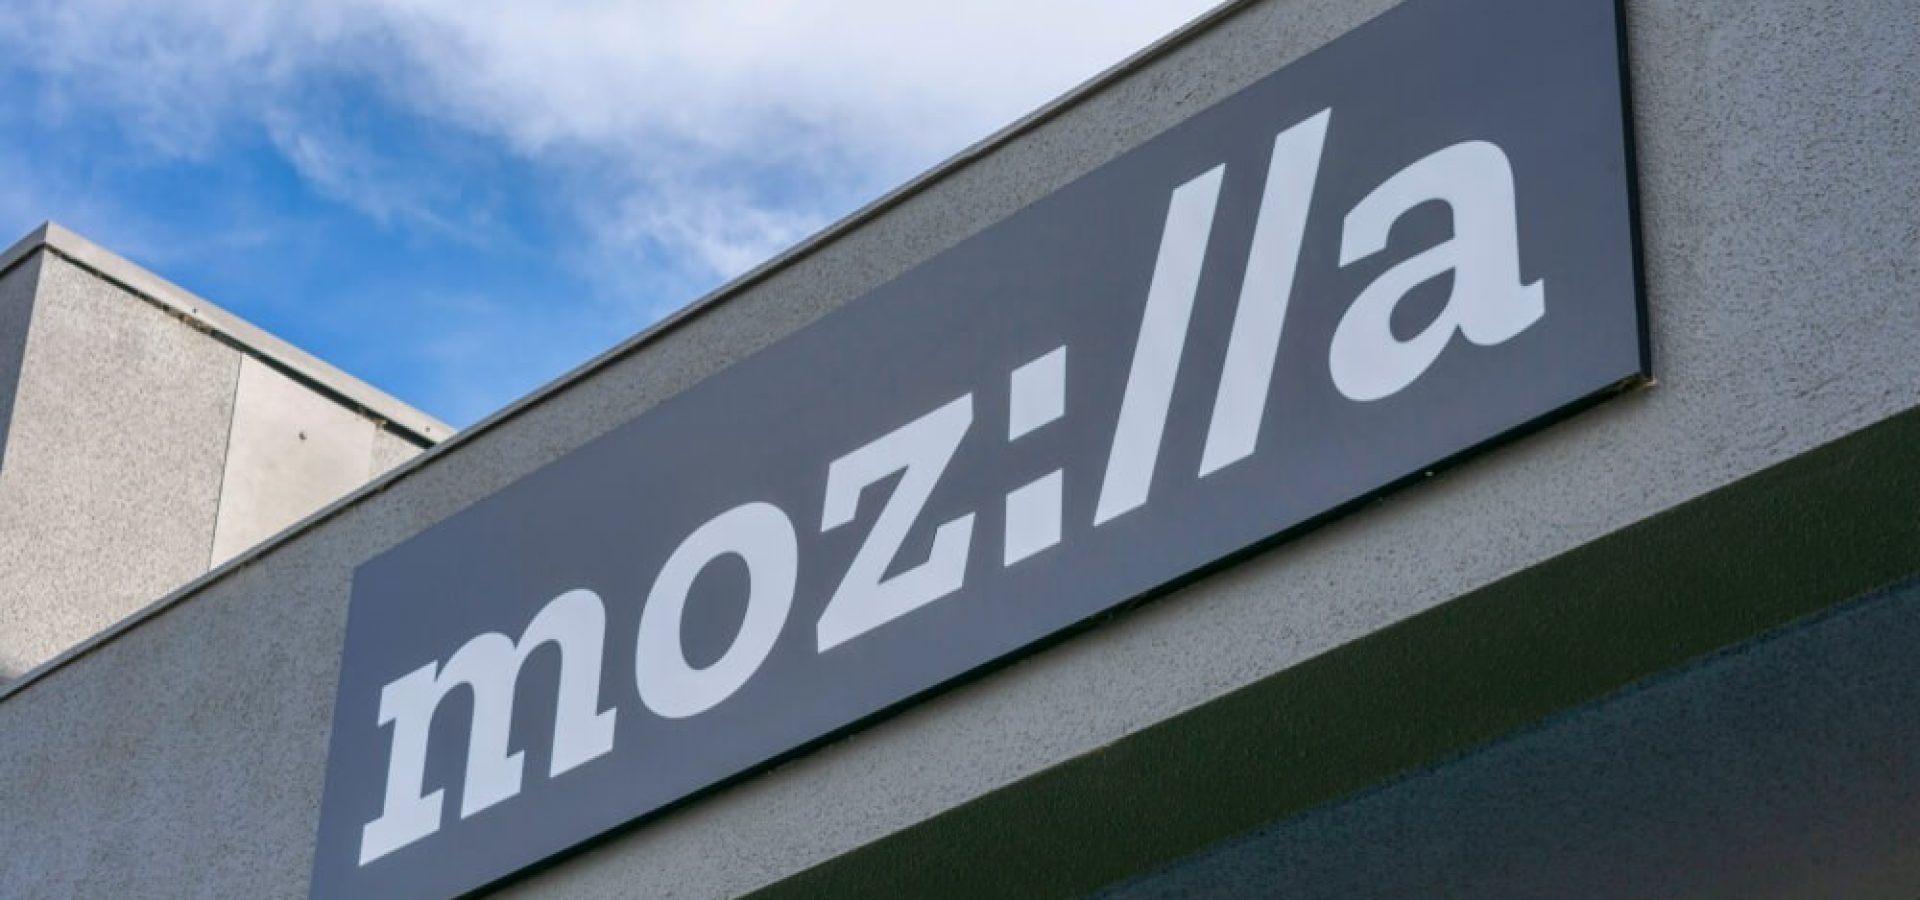 Mozilla Foundation sign on office